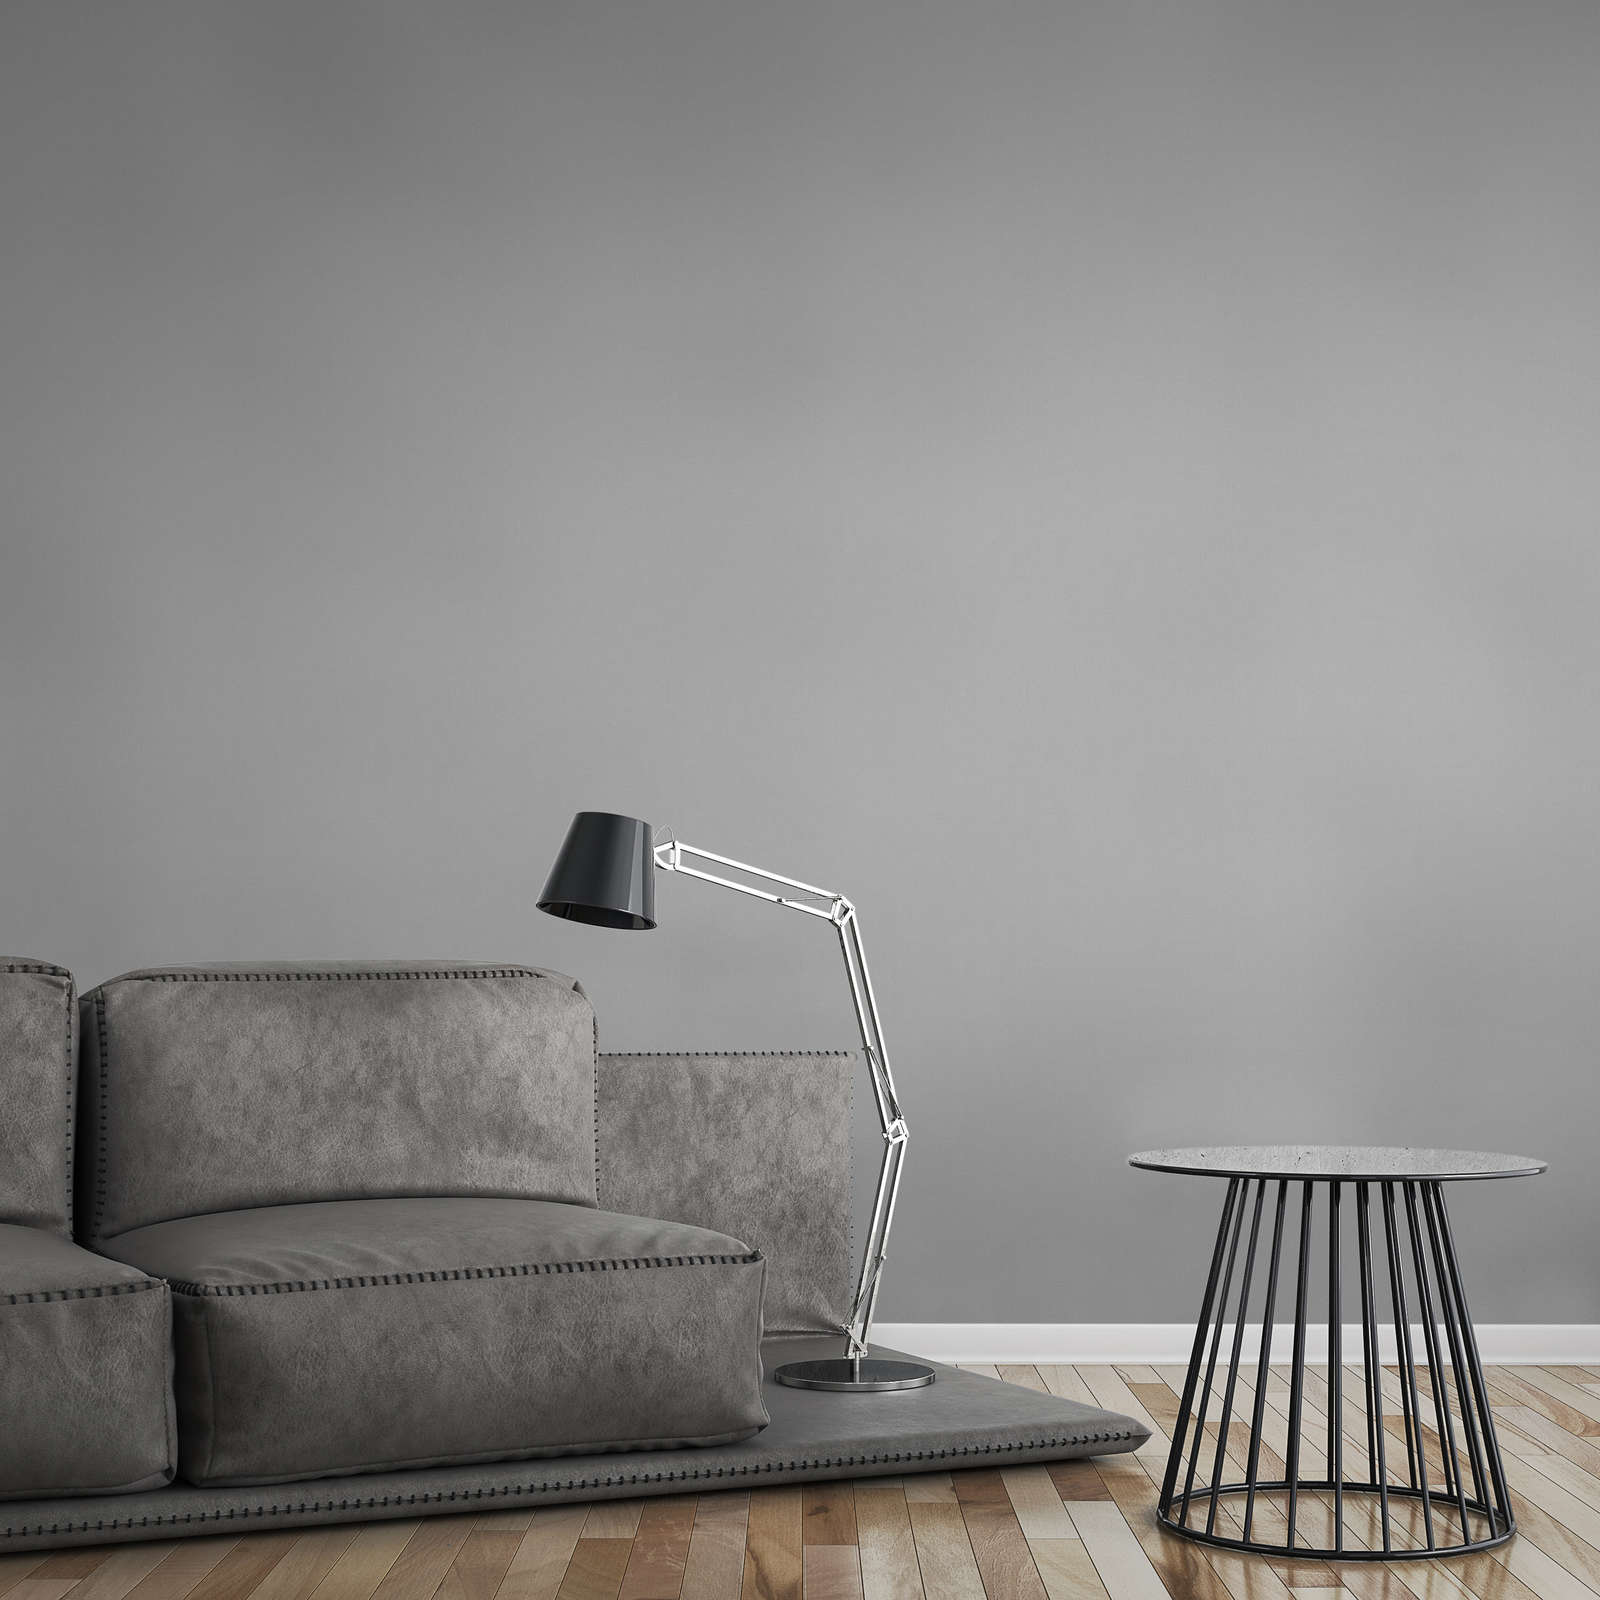             Plain wallpaper with a light textured look - grey, dark grey
        